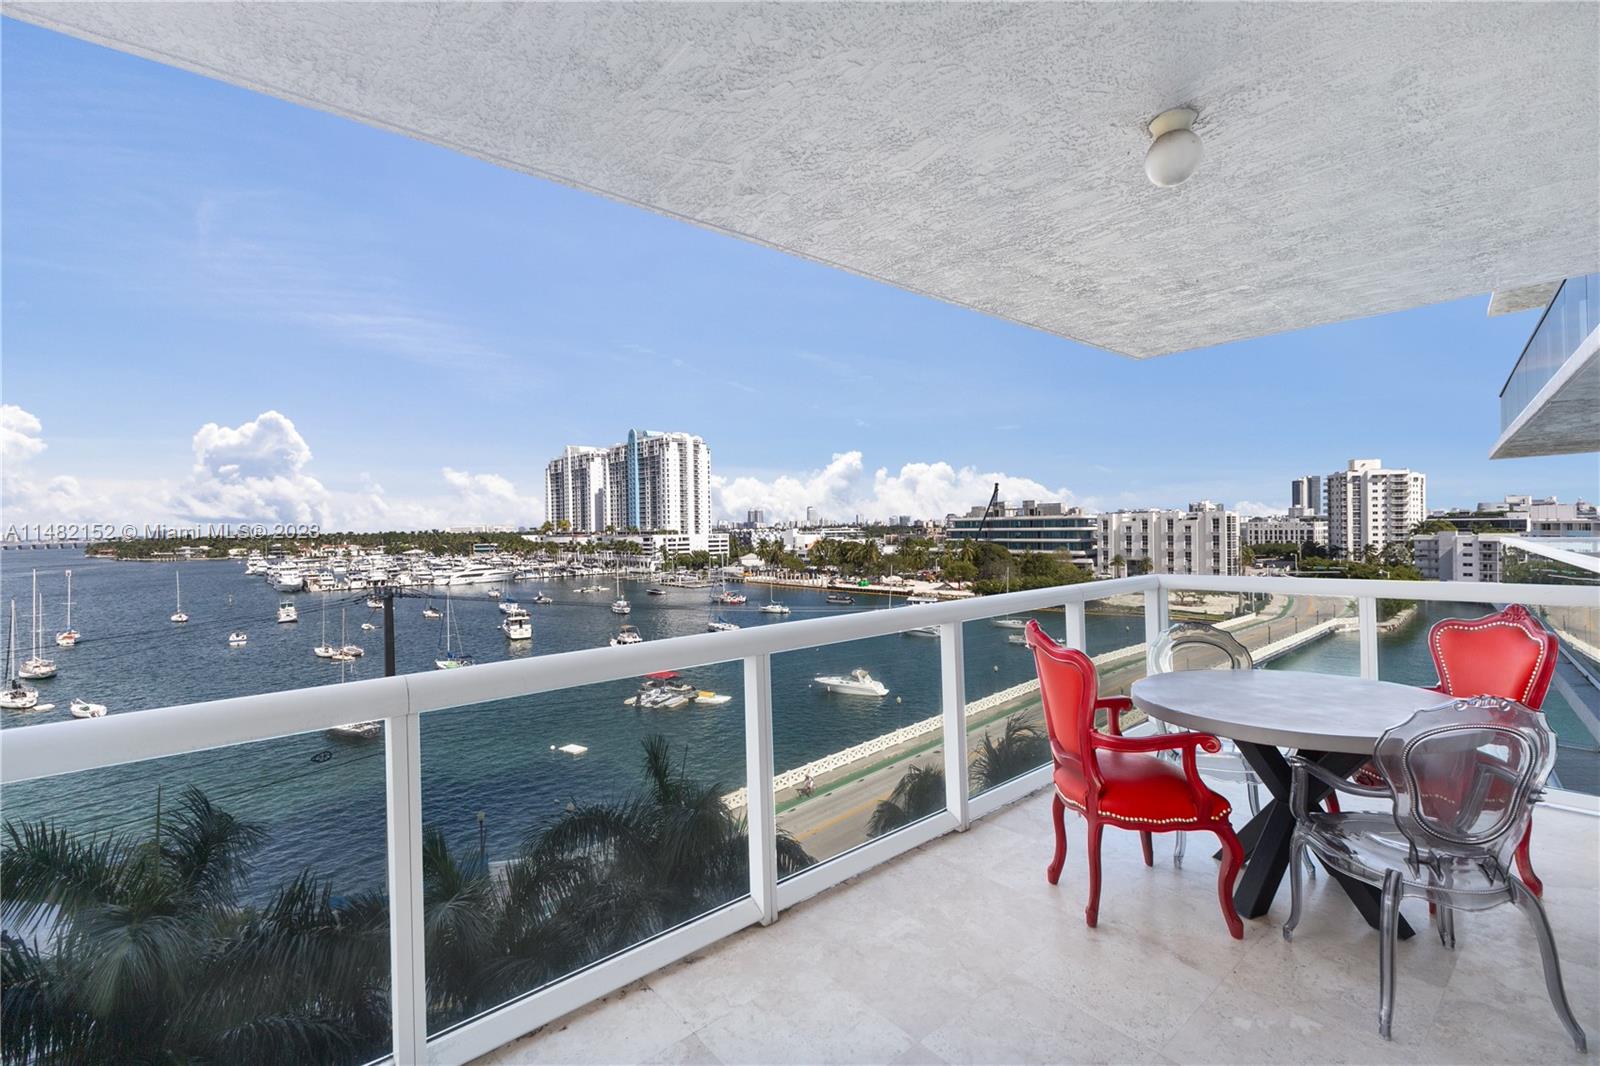 Property for Sale at 10 Venetian Way 703, Miami Beach, Miami-Dade County, Florida - Bedrooms: 2 
Bathrooms: 2  - $1,875,000